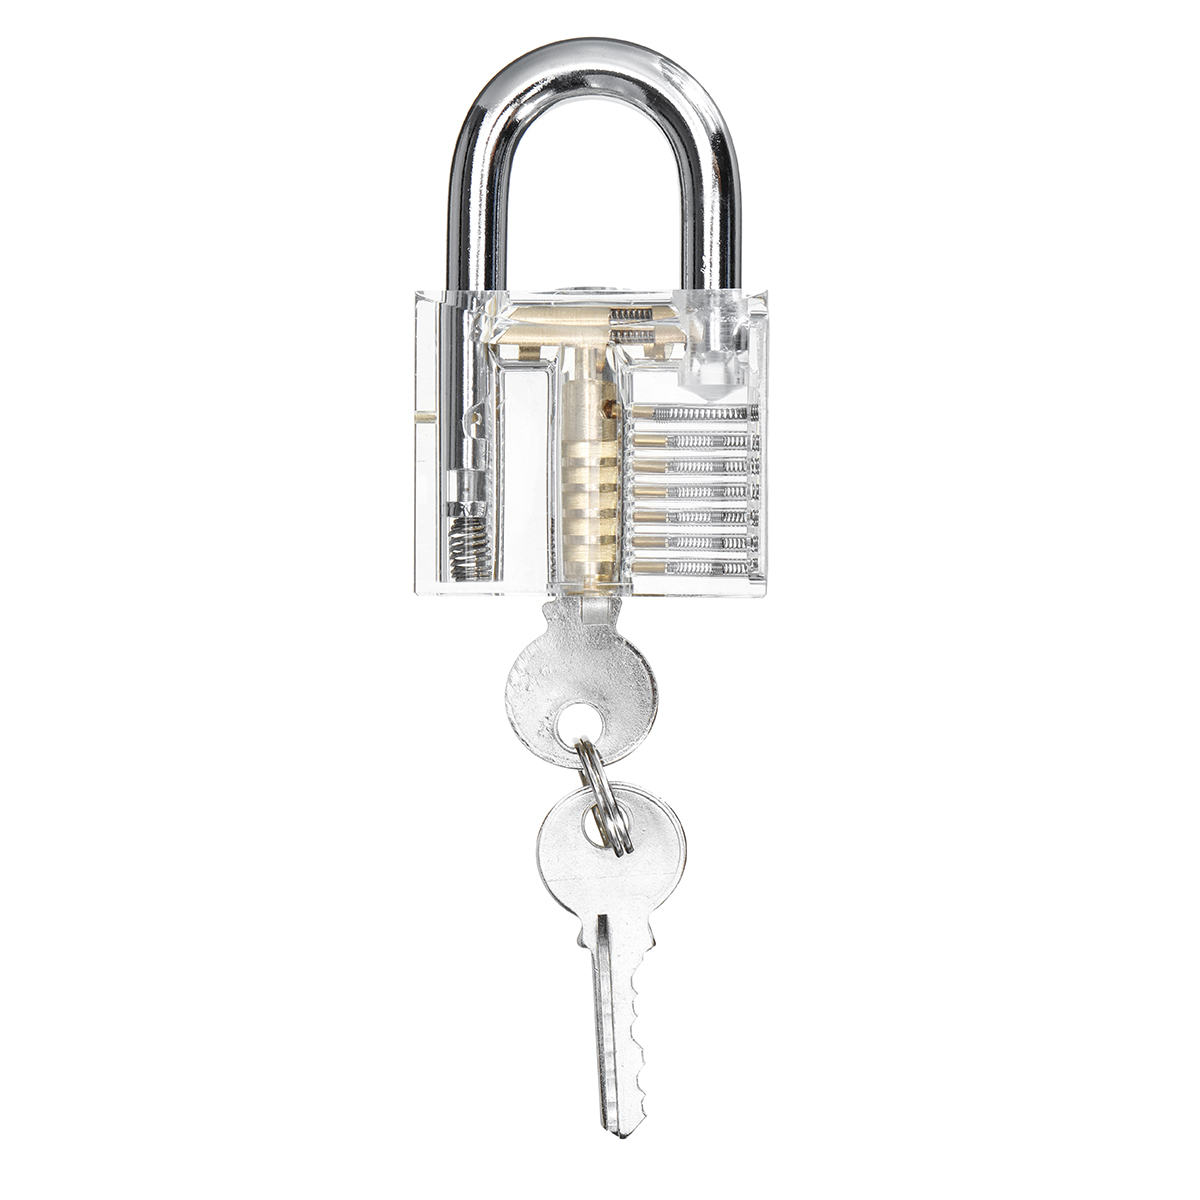 Find 14Pcs Training Unlock Tool Skill Set Unlocking Lock Picks Set Key Transparent Practical Lock for Sale on Gipsybee.com with cryptocurrencies